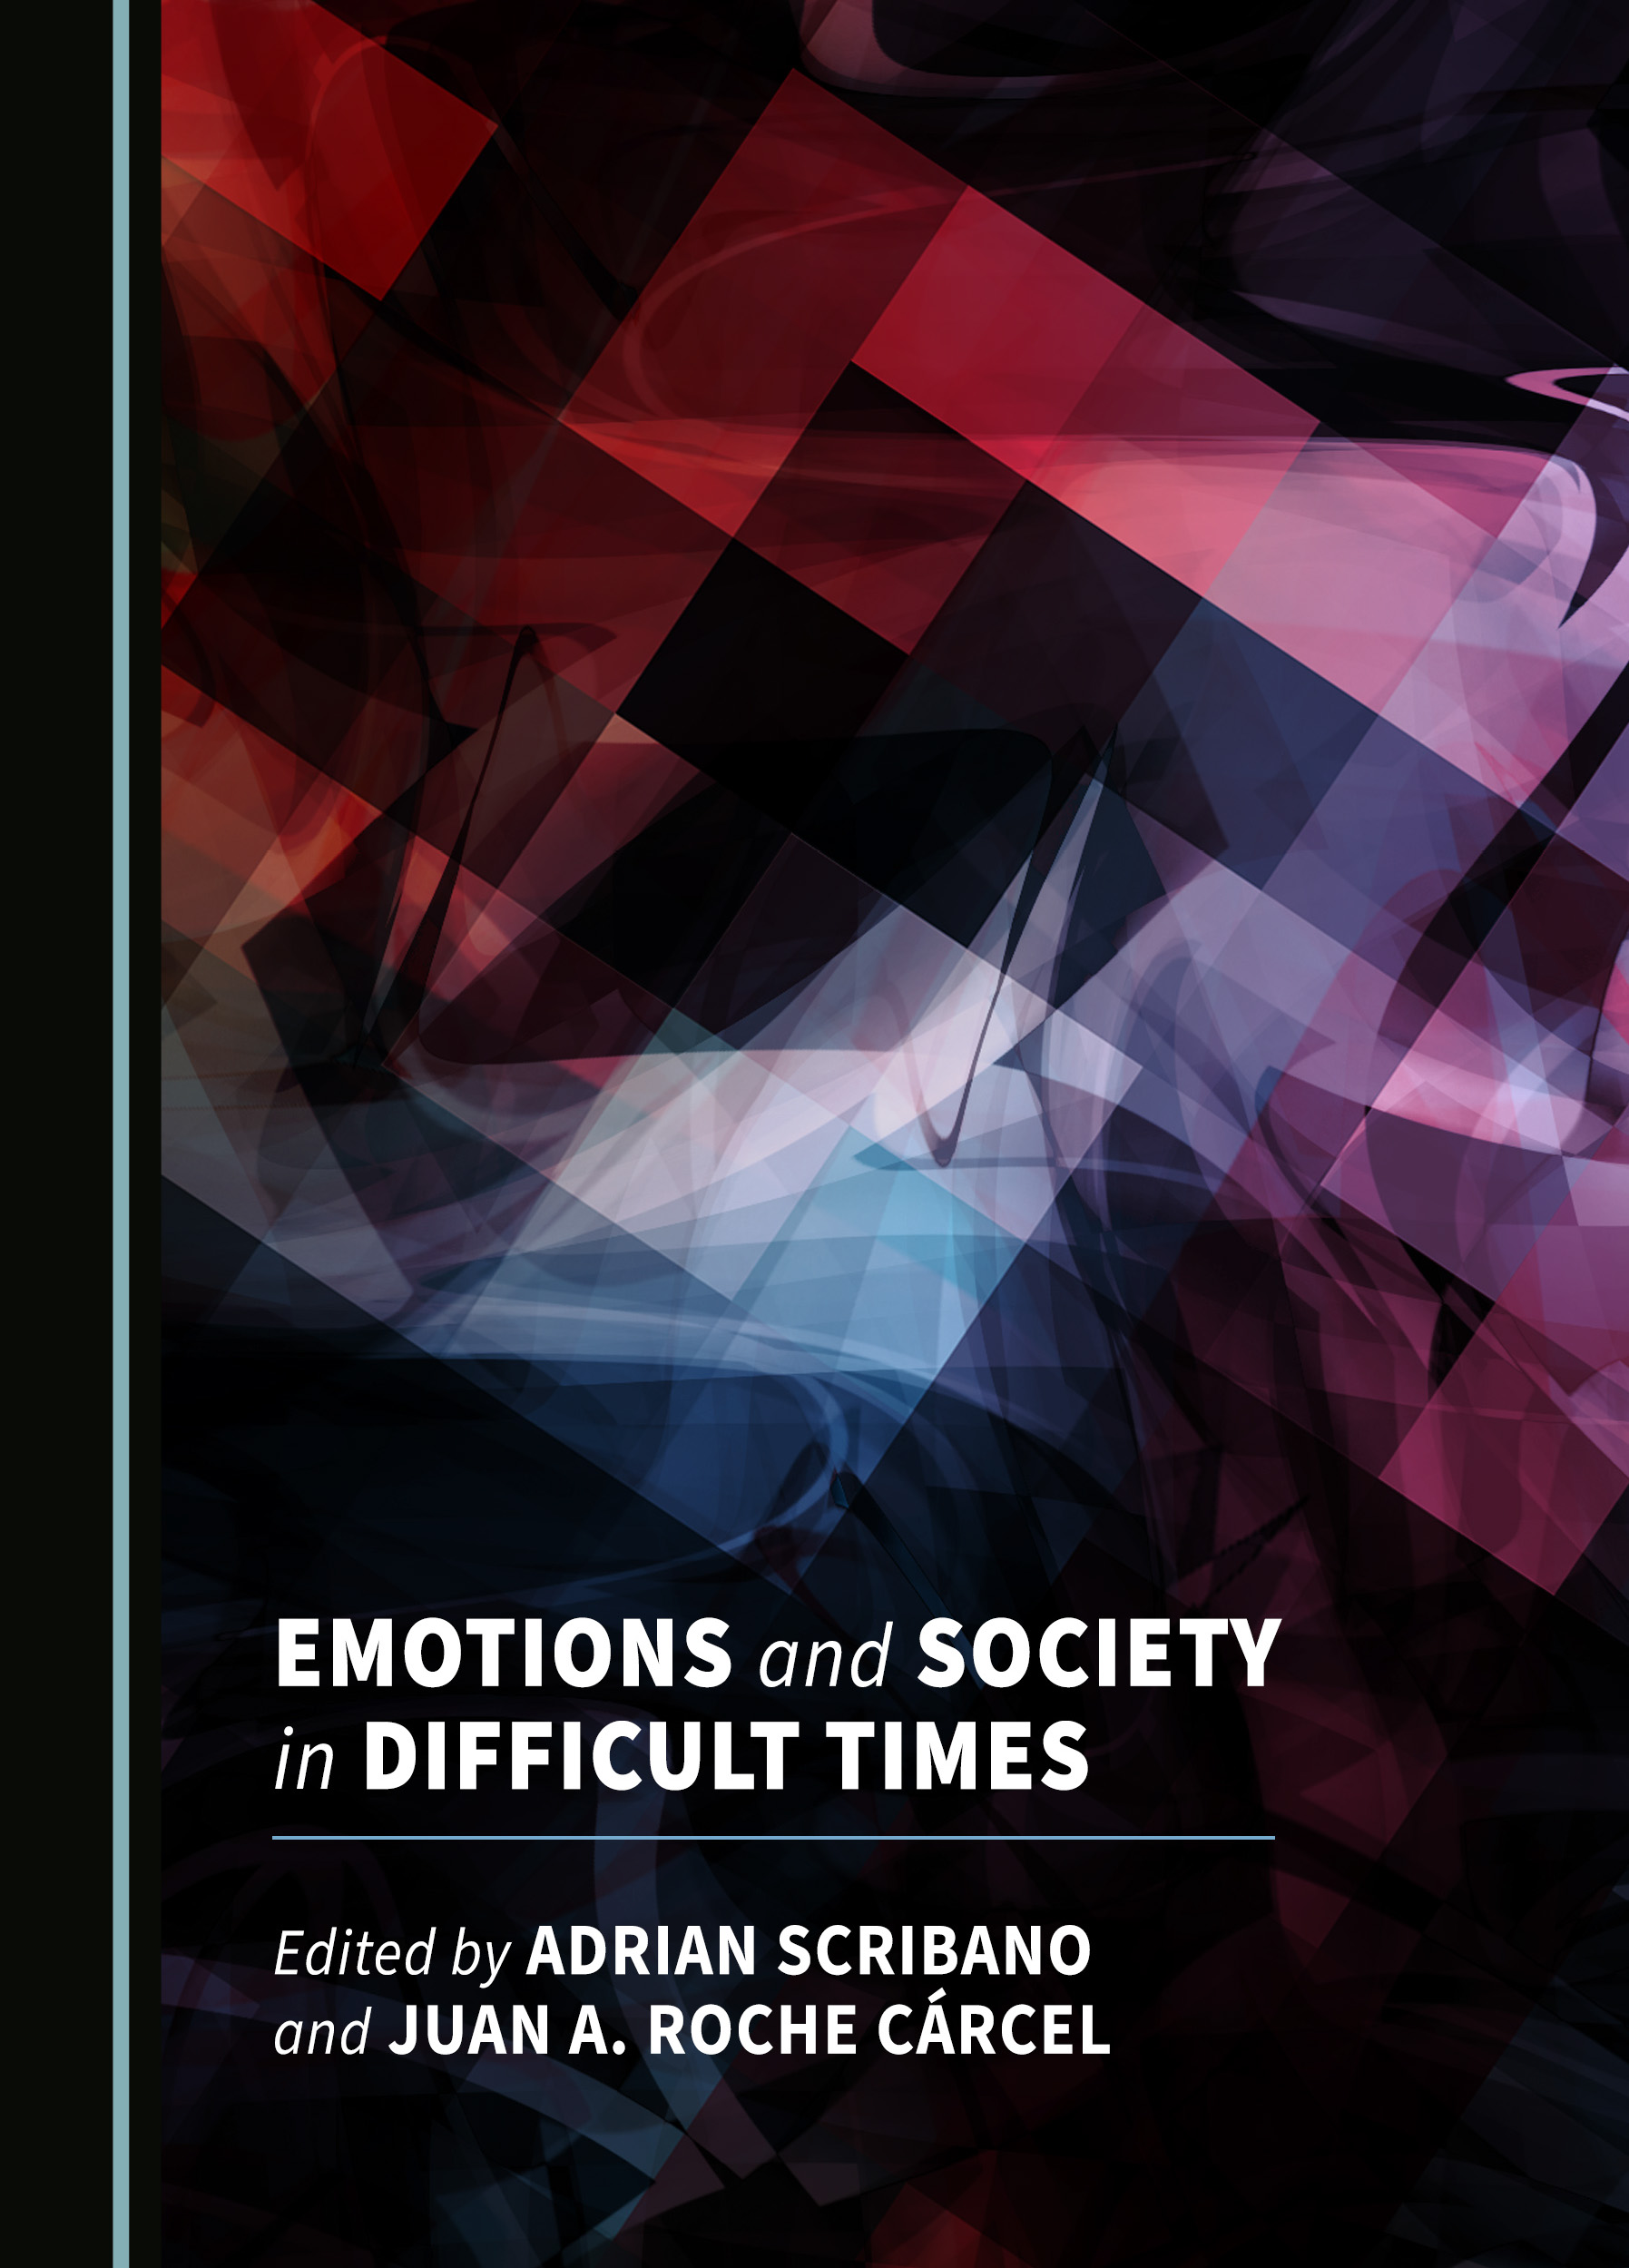 Imagen de portada del libro Emotions and society in difficult times